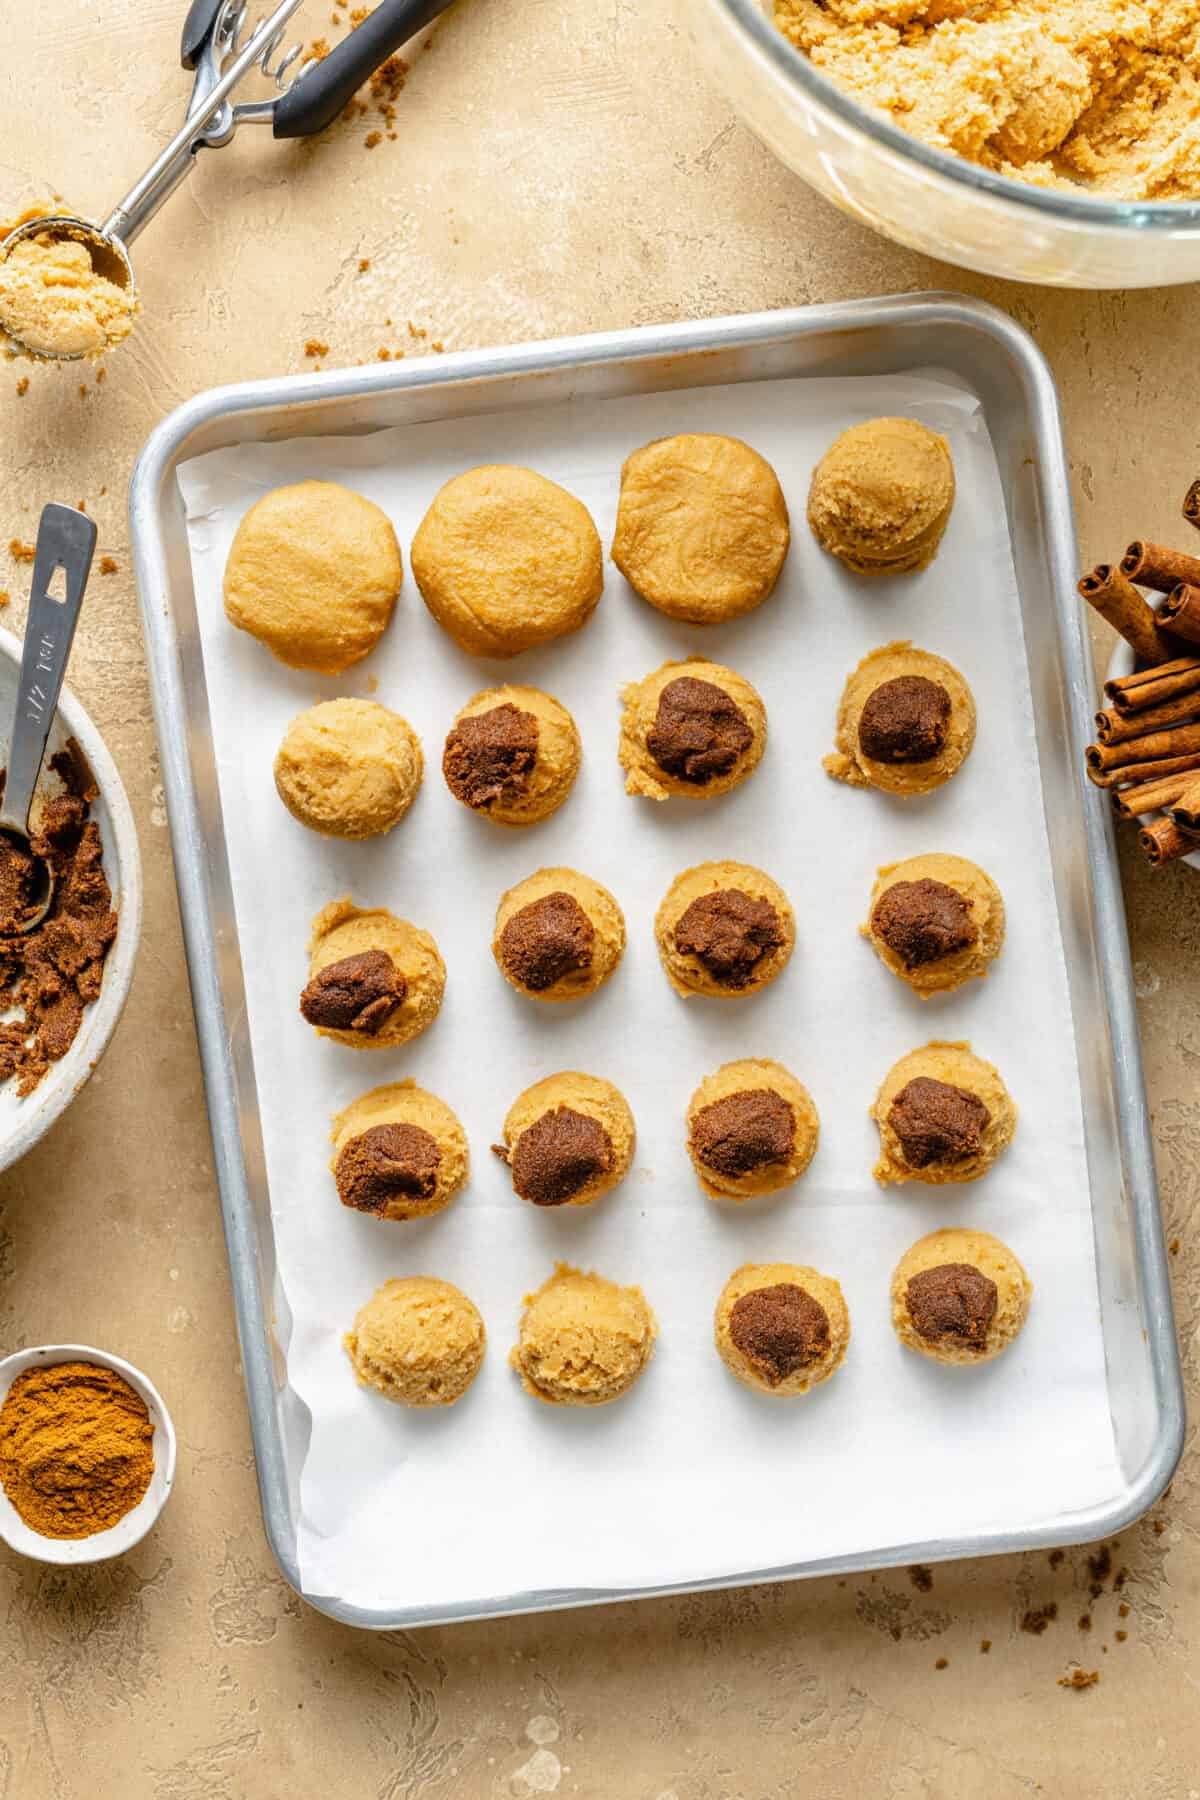 Brown Sugar "Pop-Tart" Cookies being assembled on sheet pan.